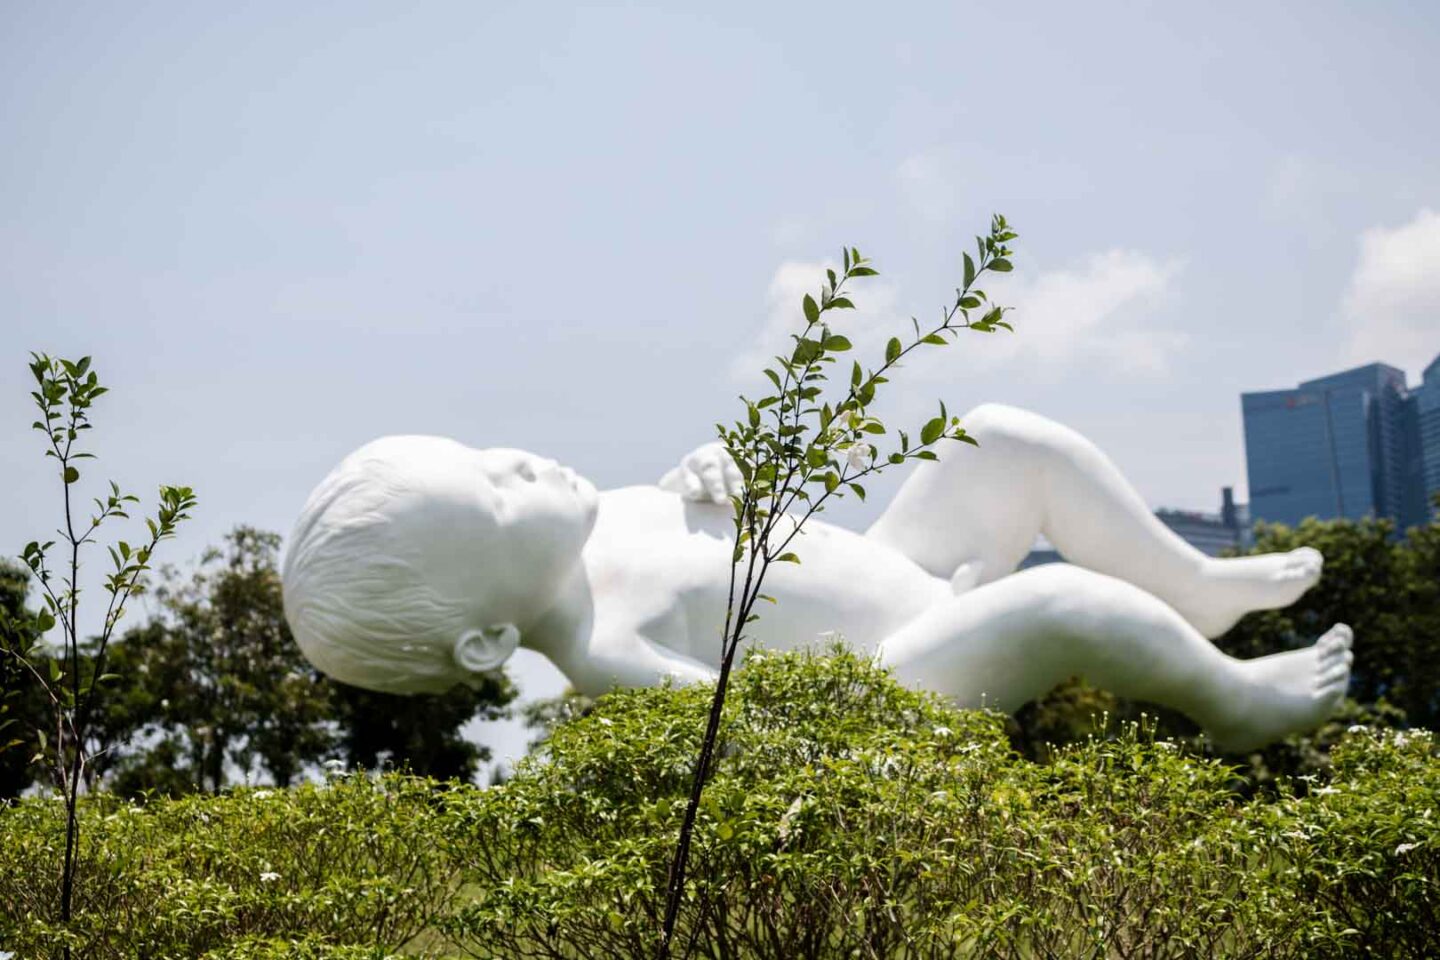 Singapore sculptures, The Planet